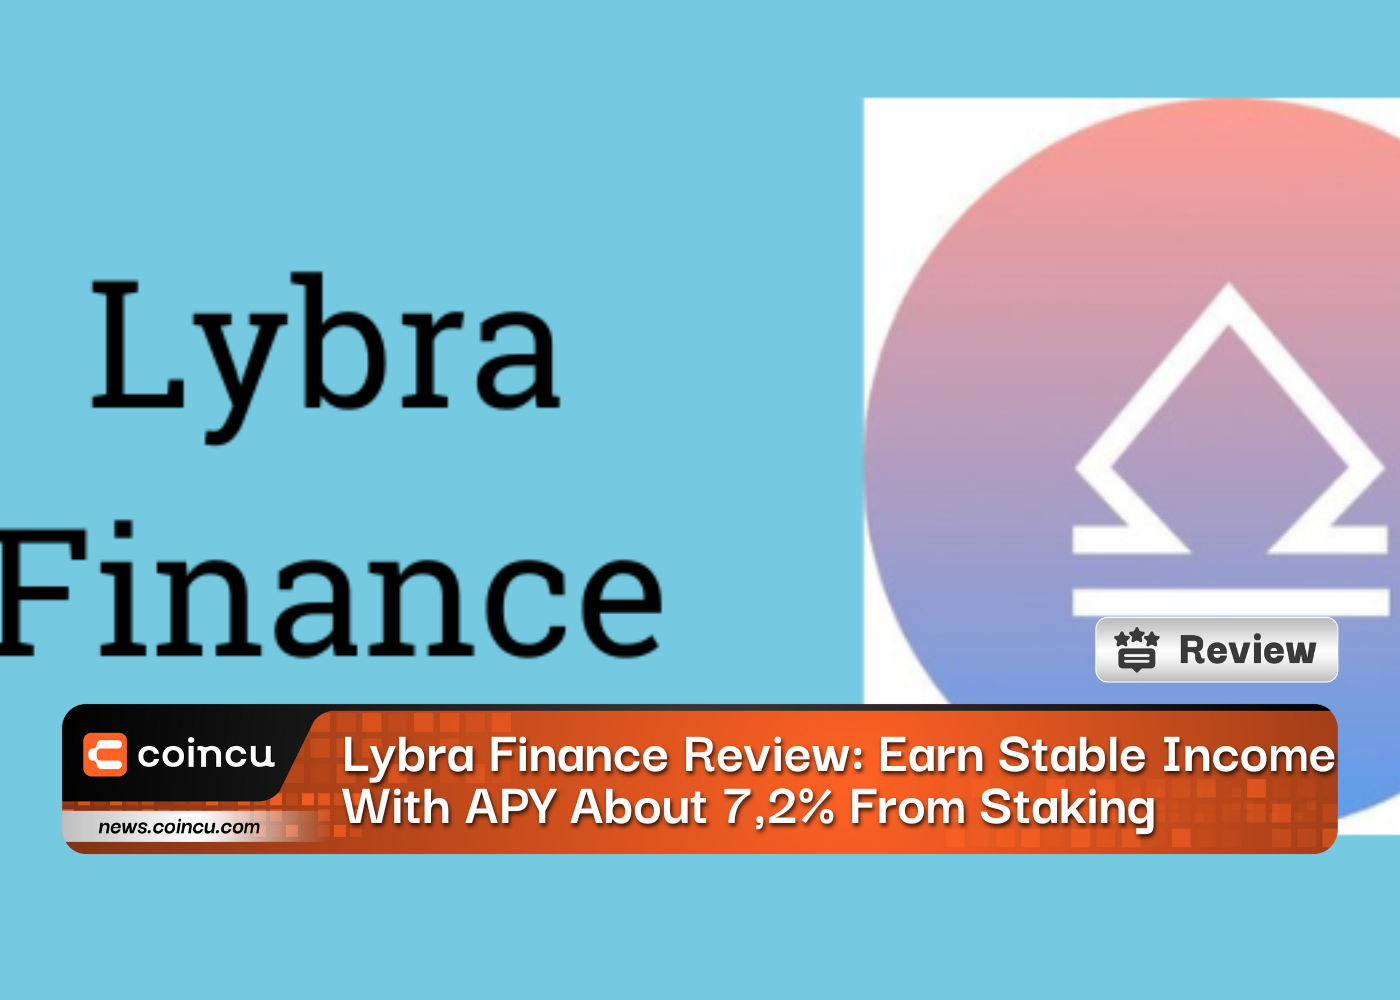 Lybra 금융 검토: 스테이킹에서 약 7,2%의 APY로 안정적인 수입 획득